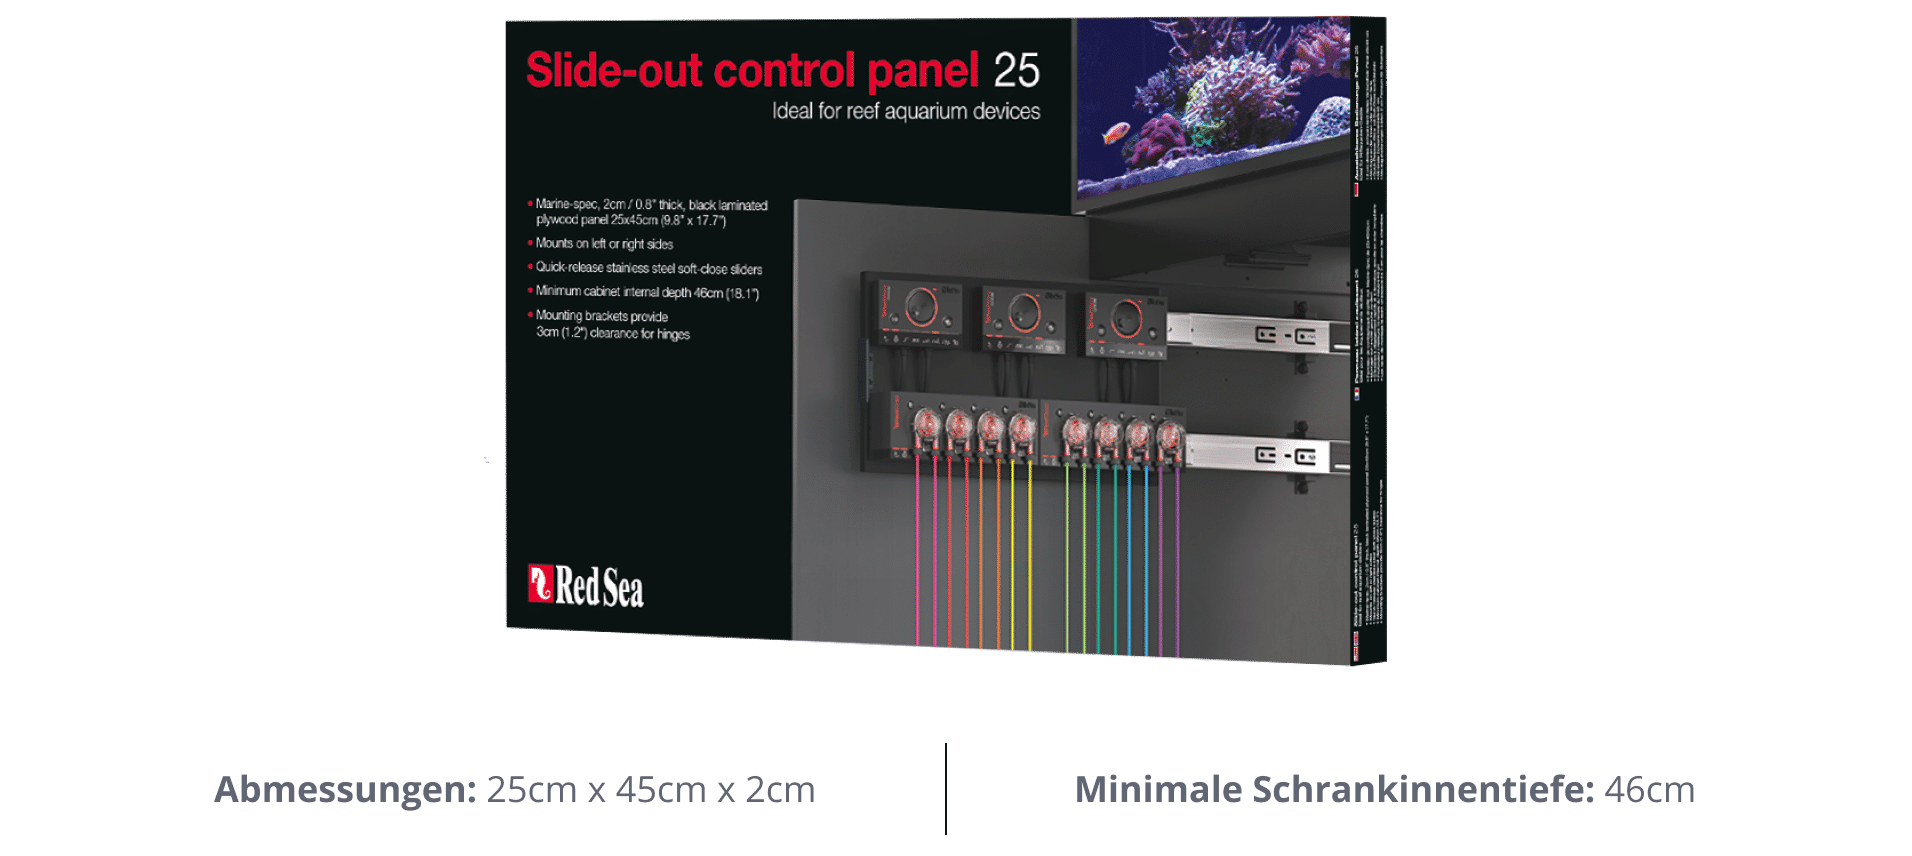 Red Sea Control Panel 25